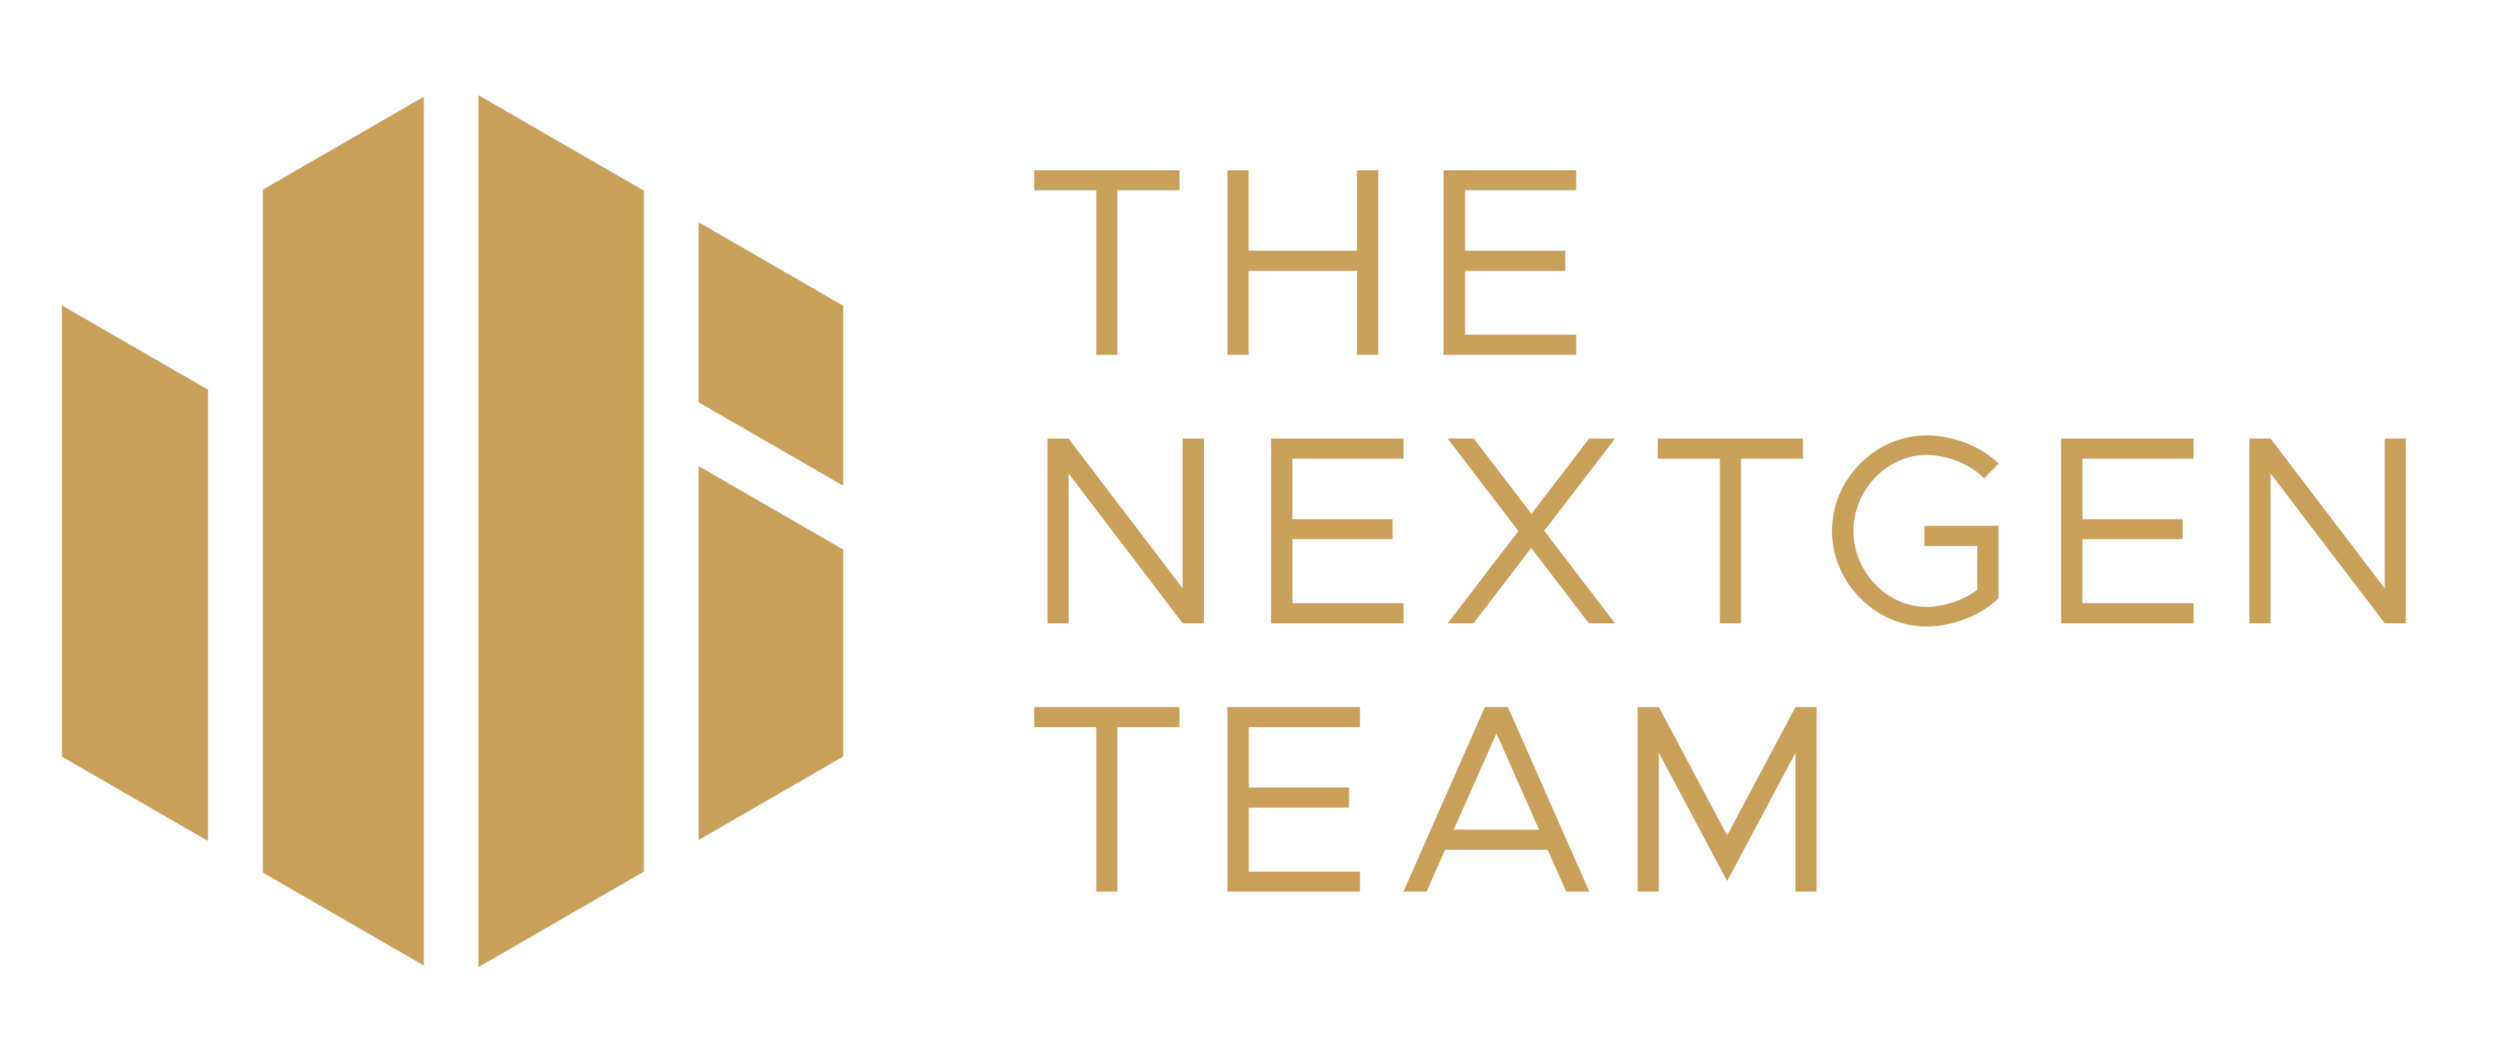 The NextGen Team